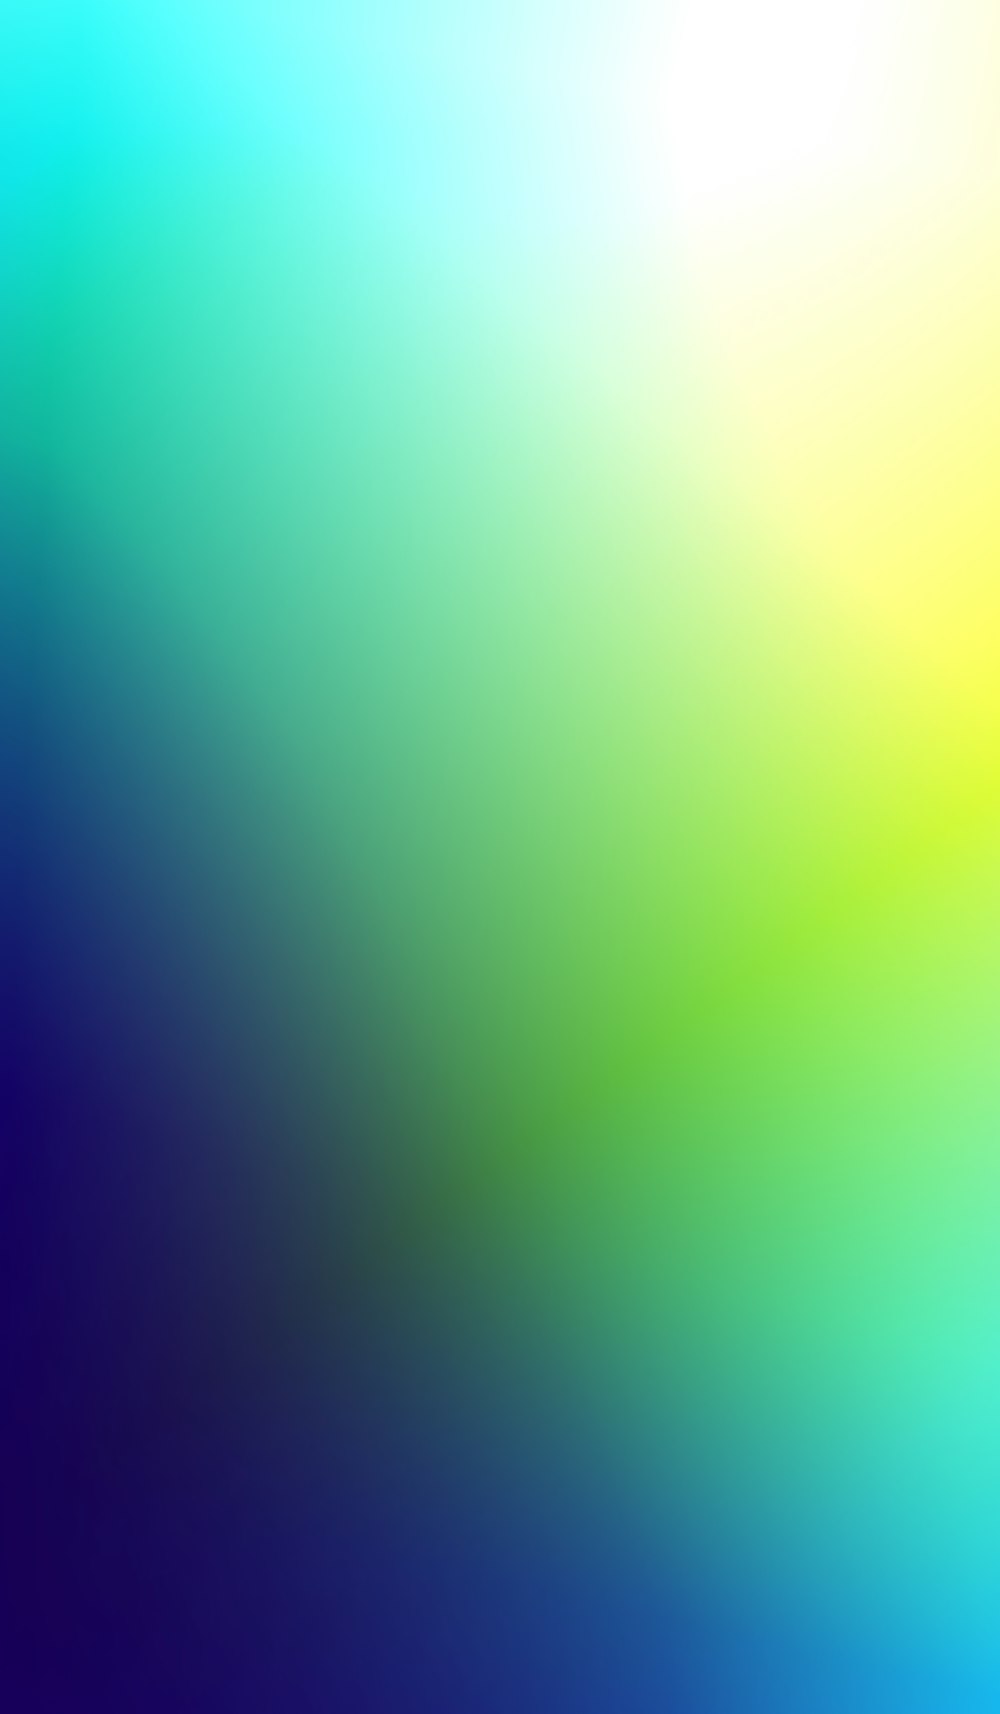 green and yellow light digital wallpaper photo – Free Web Image on Unsplash